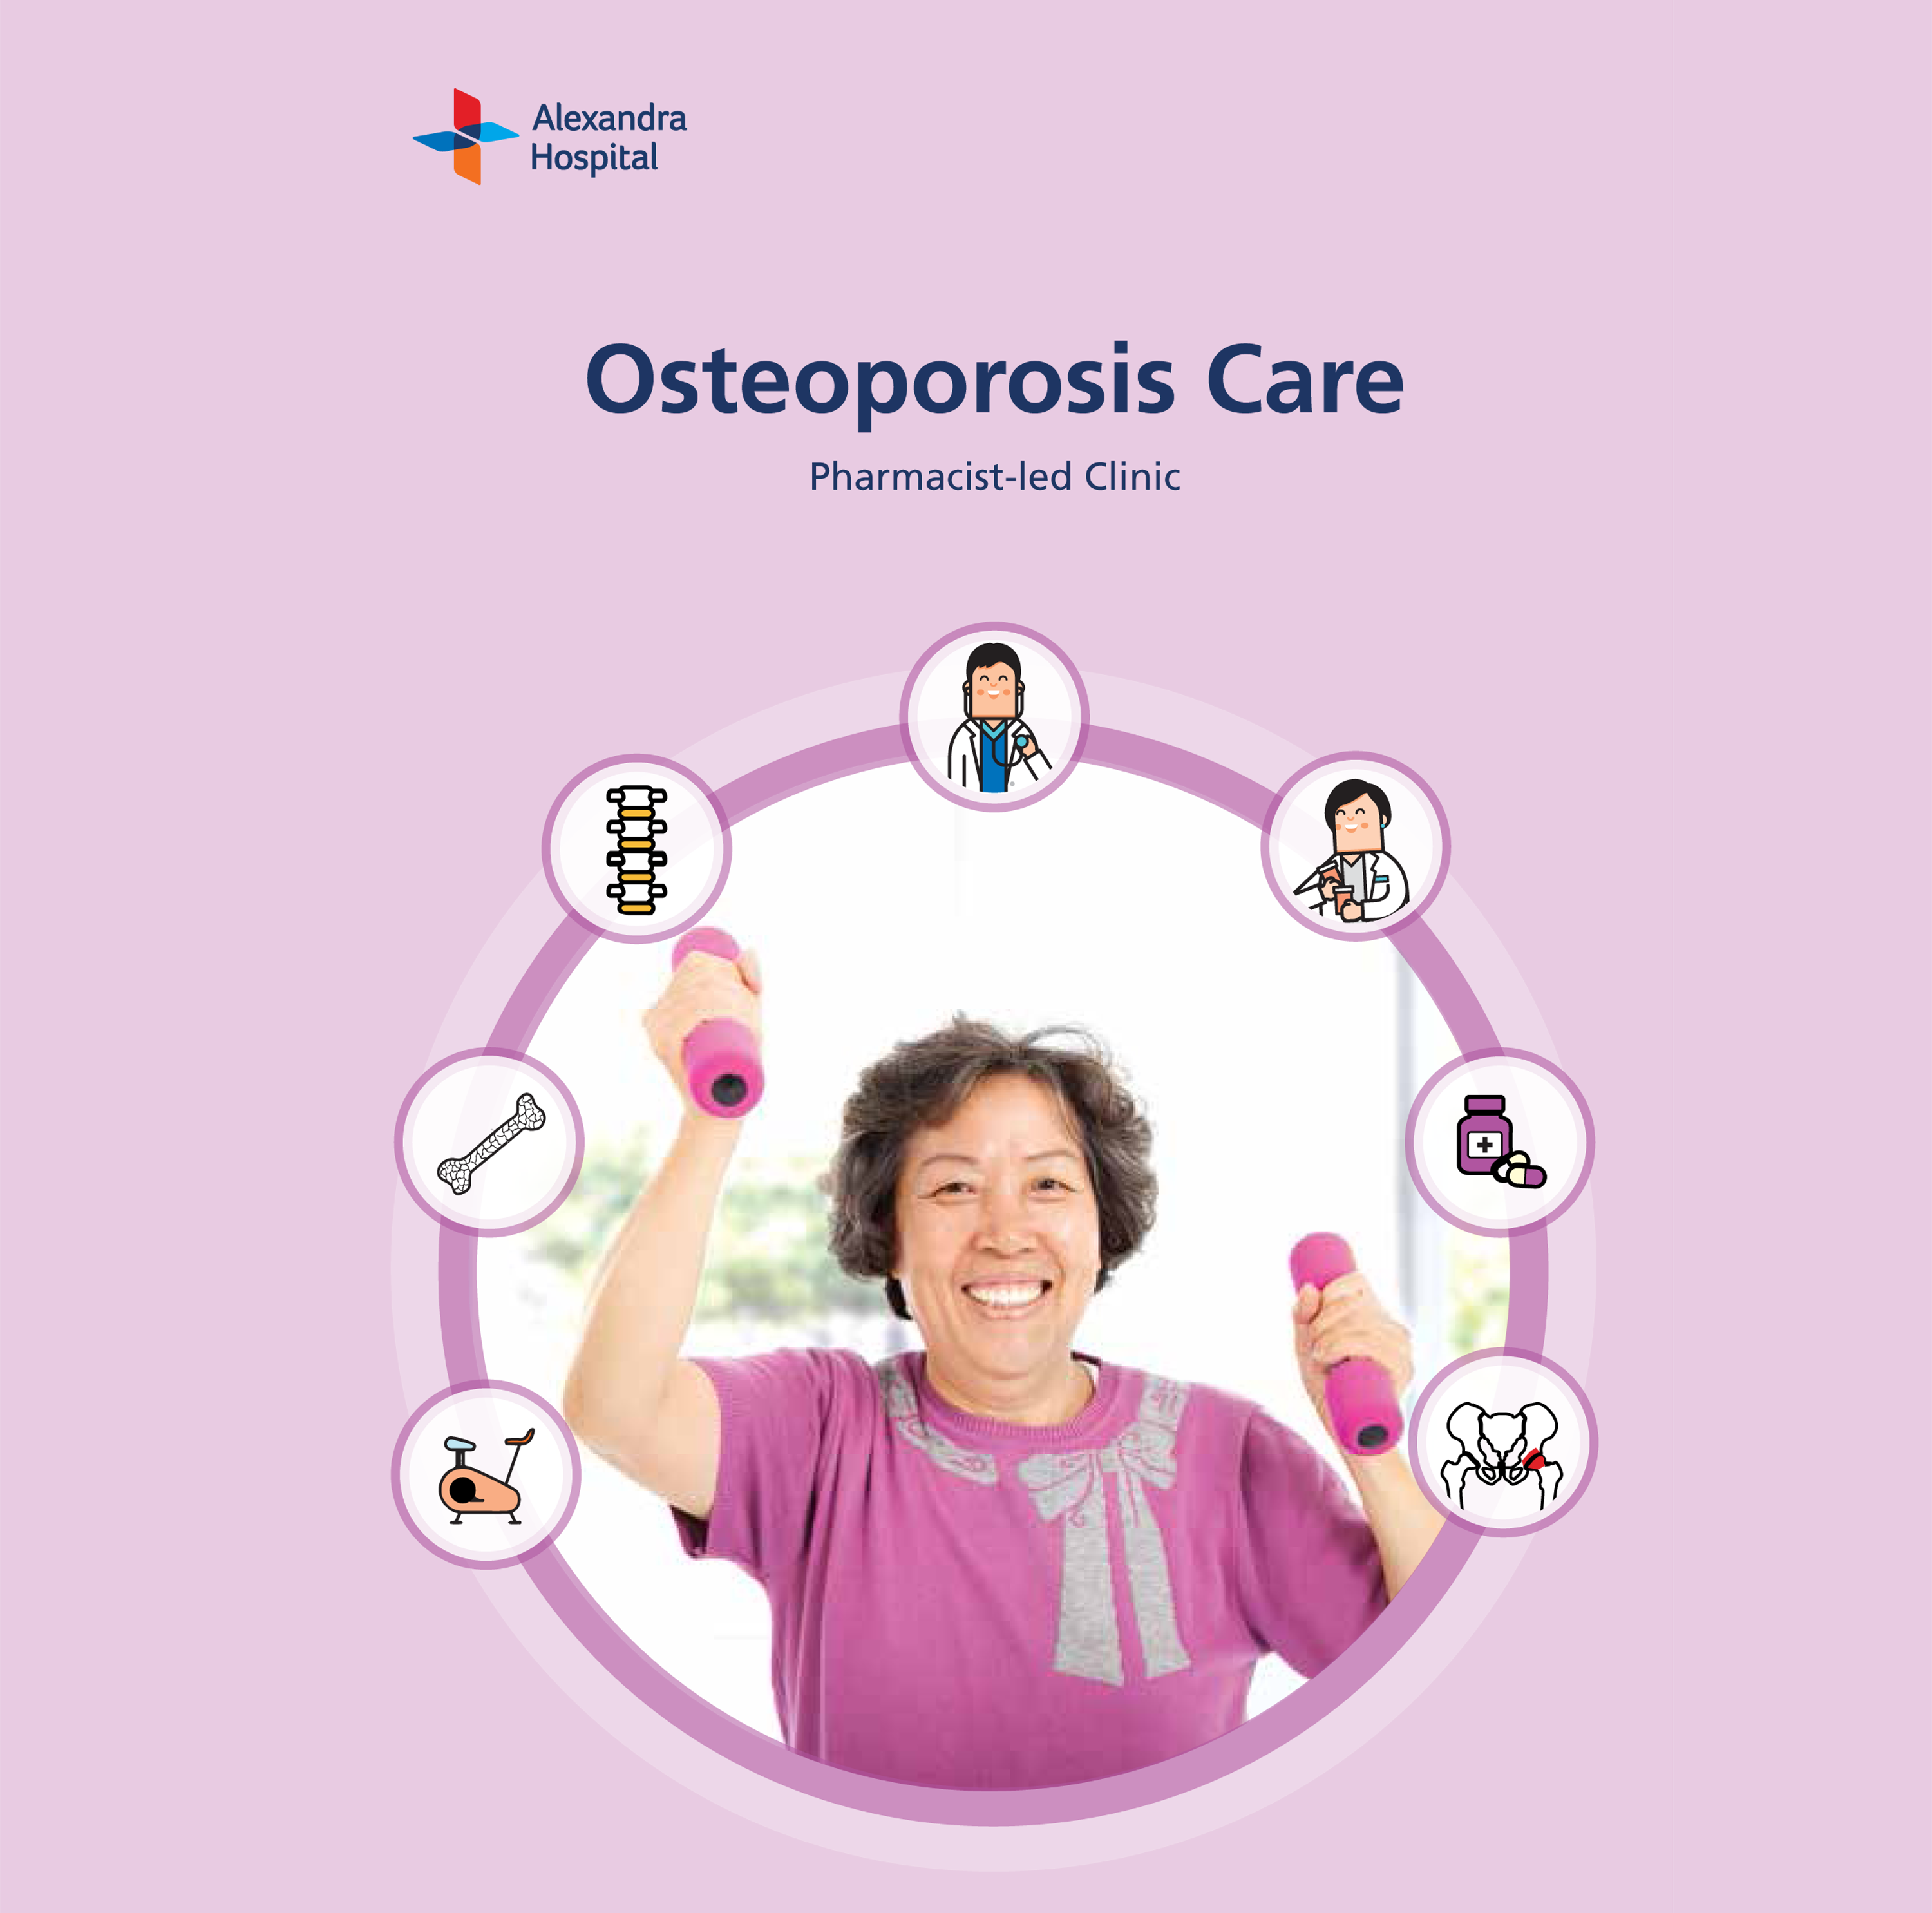 Osteoporosis Care - Pharmacist-Led Clinic